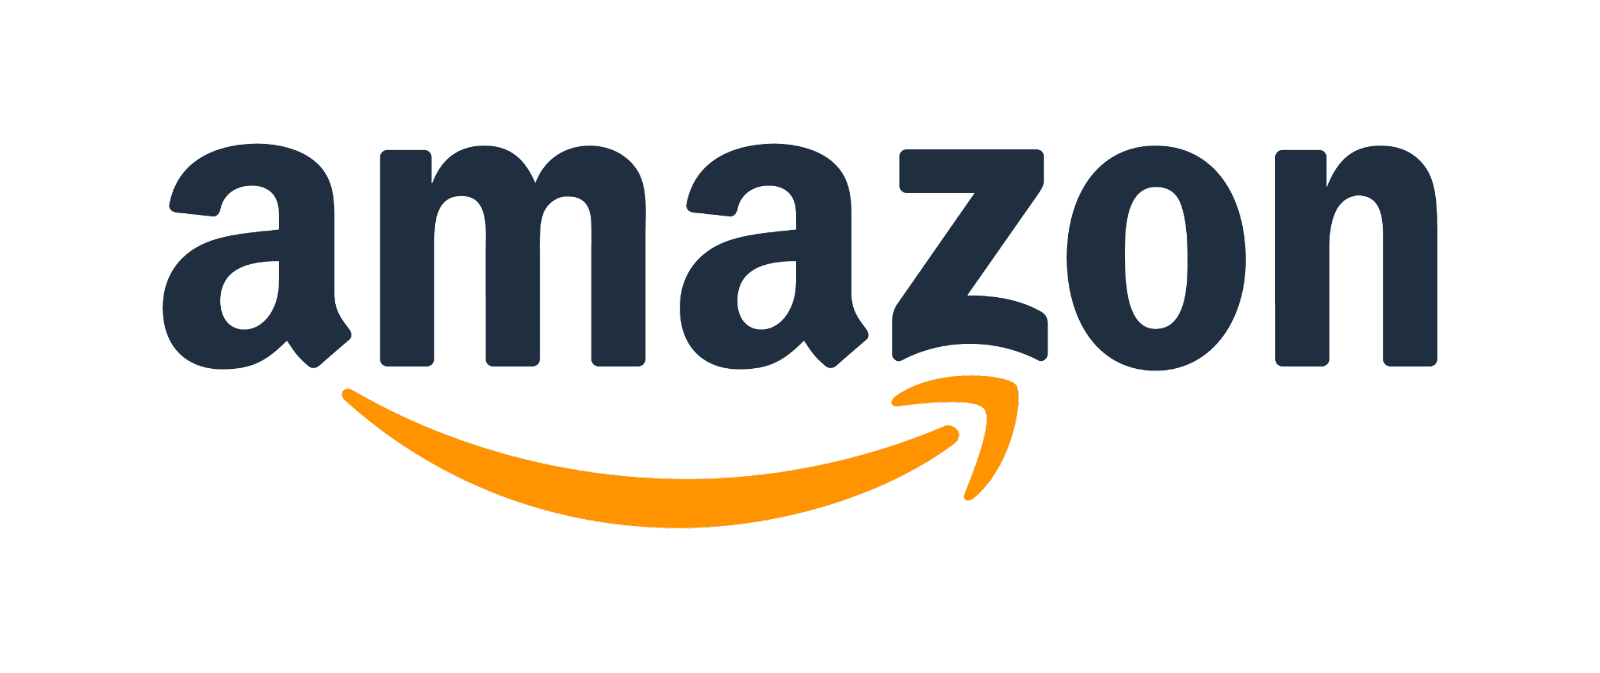 The logo for Amazon